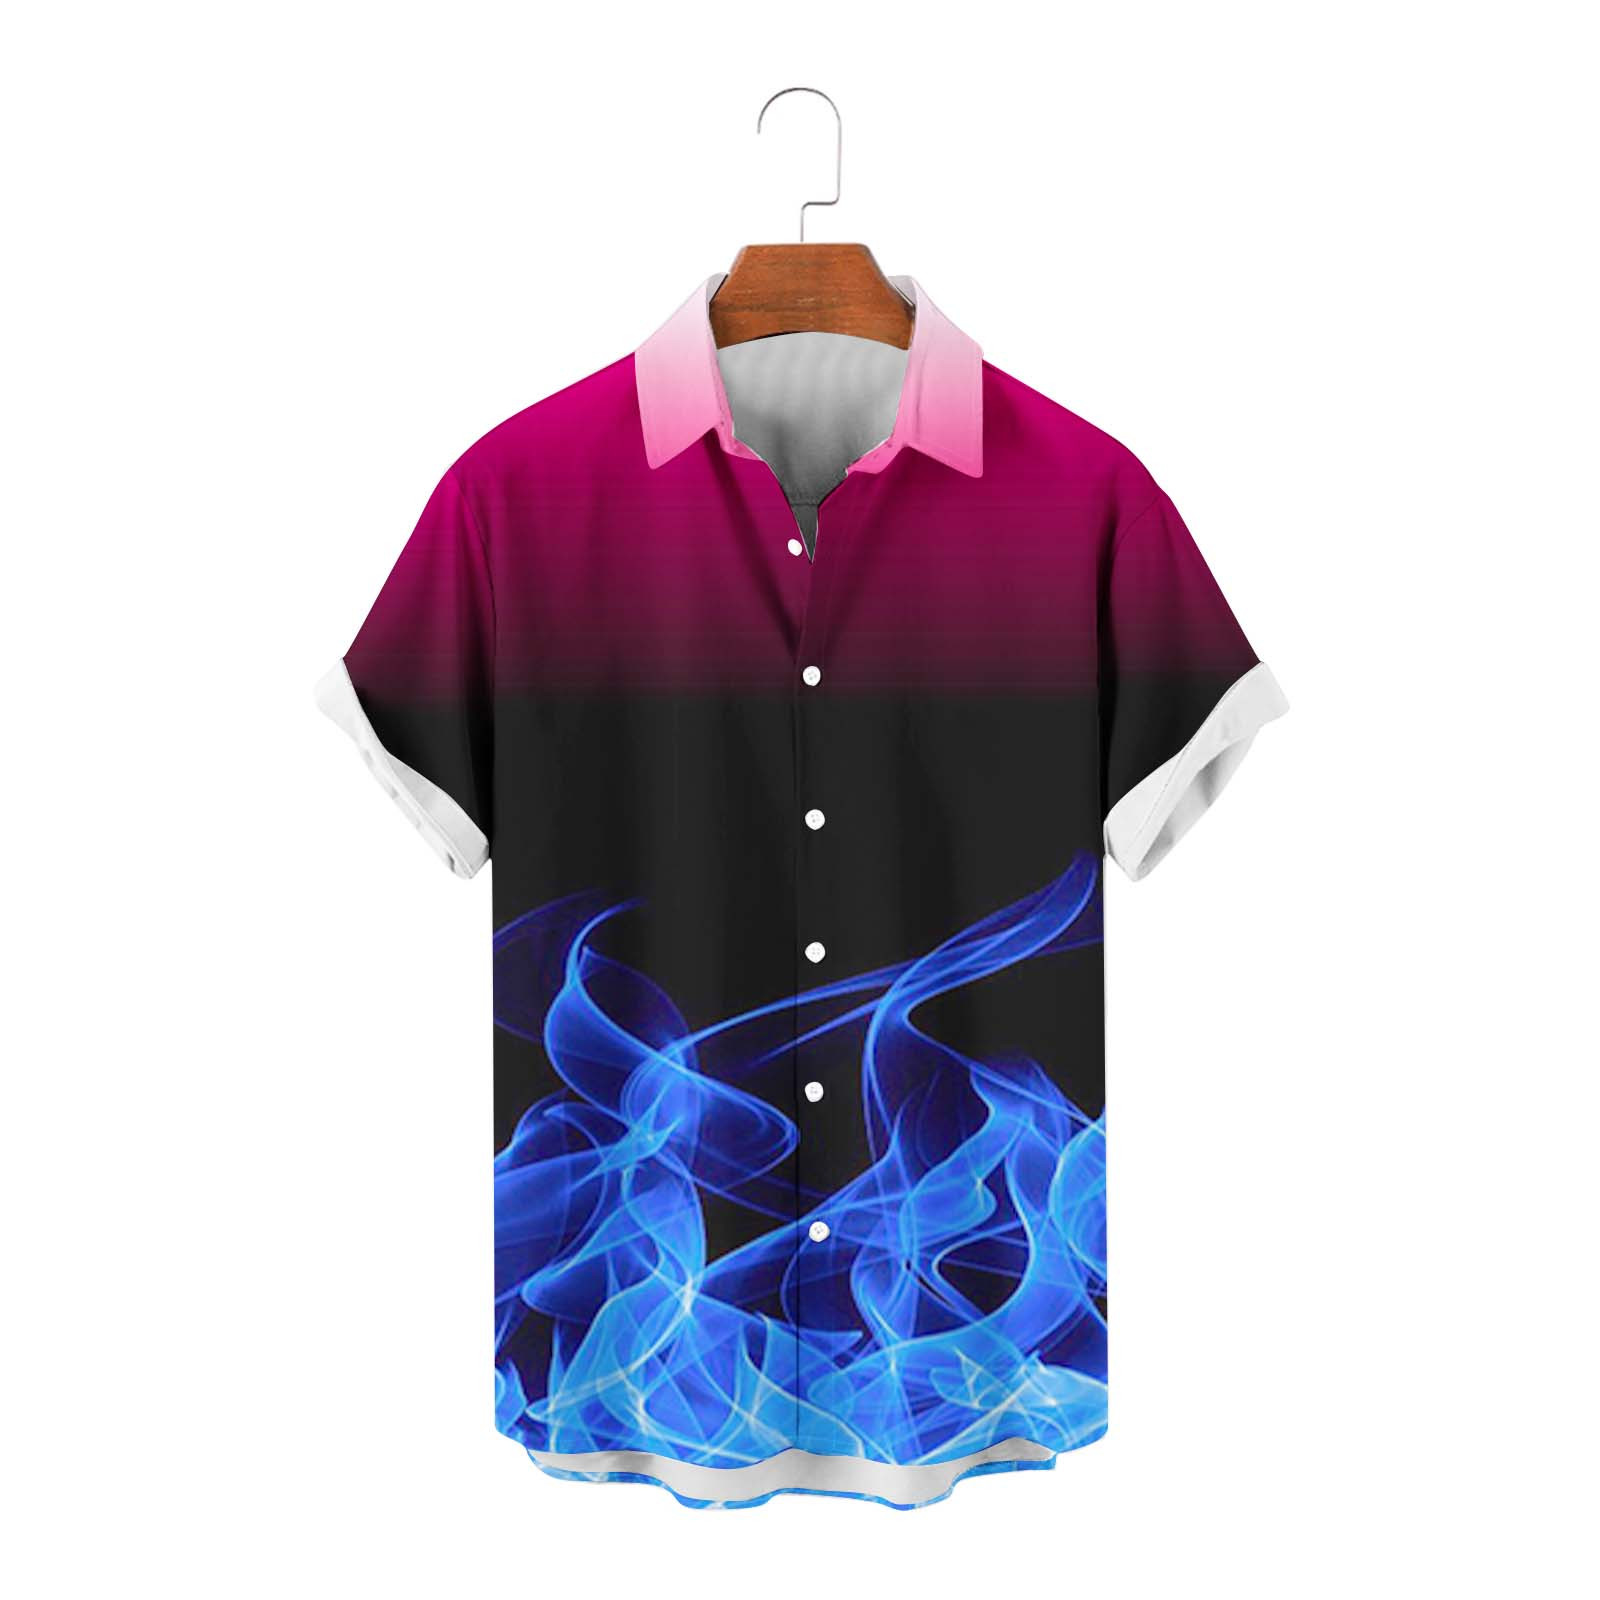 QIPOPIQ Men's Short Sleeve Turndown Collar Shirts Men 3D Fire Pattern Hawaiian Shirt Summer Fashion Printed Have Pockets Button Shirt Tops Tees Shirt Gift for Father & Him 2023 Deals Blue L - image 2 of 4